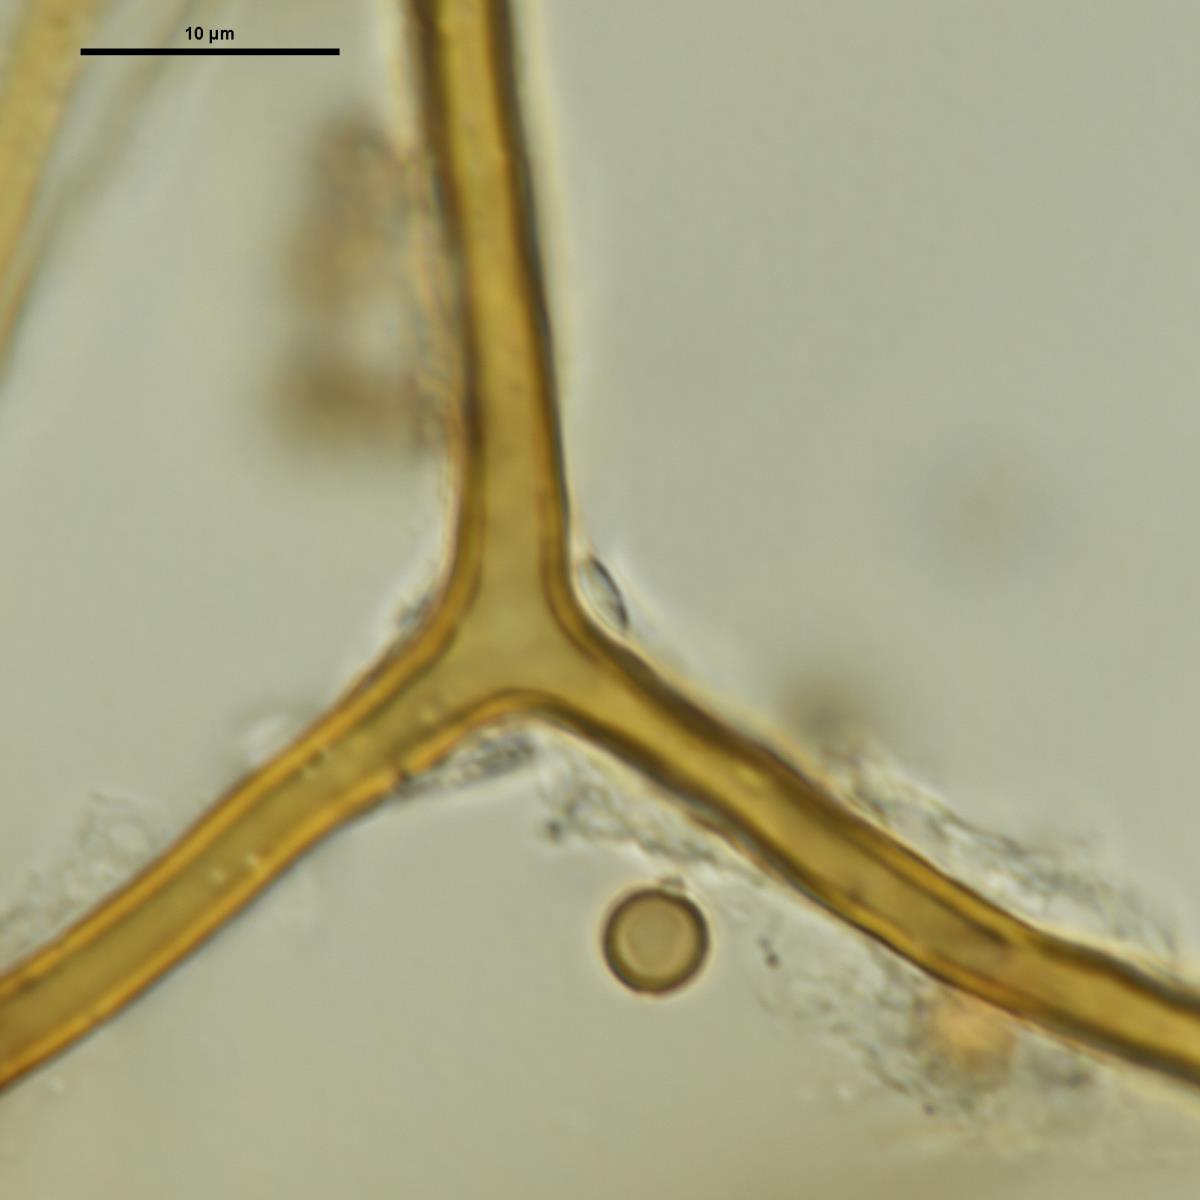 Lycoperdon spadiceum image